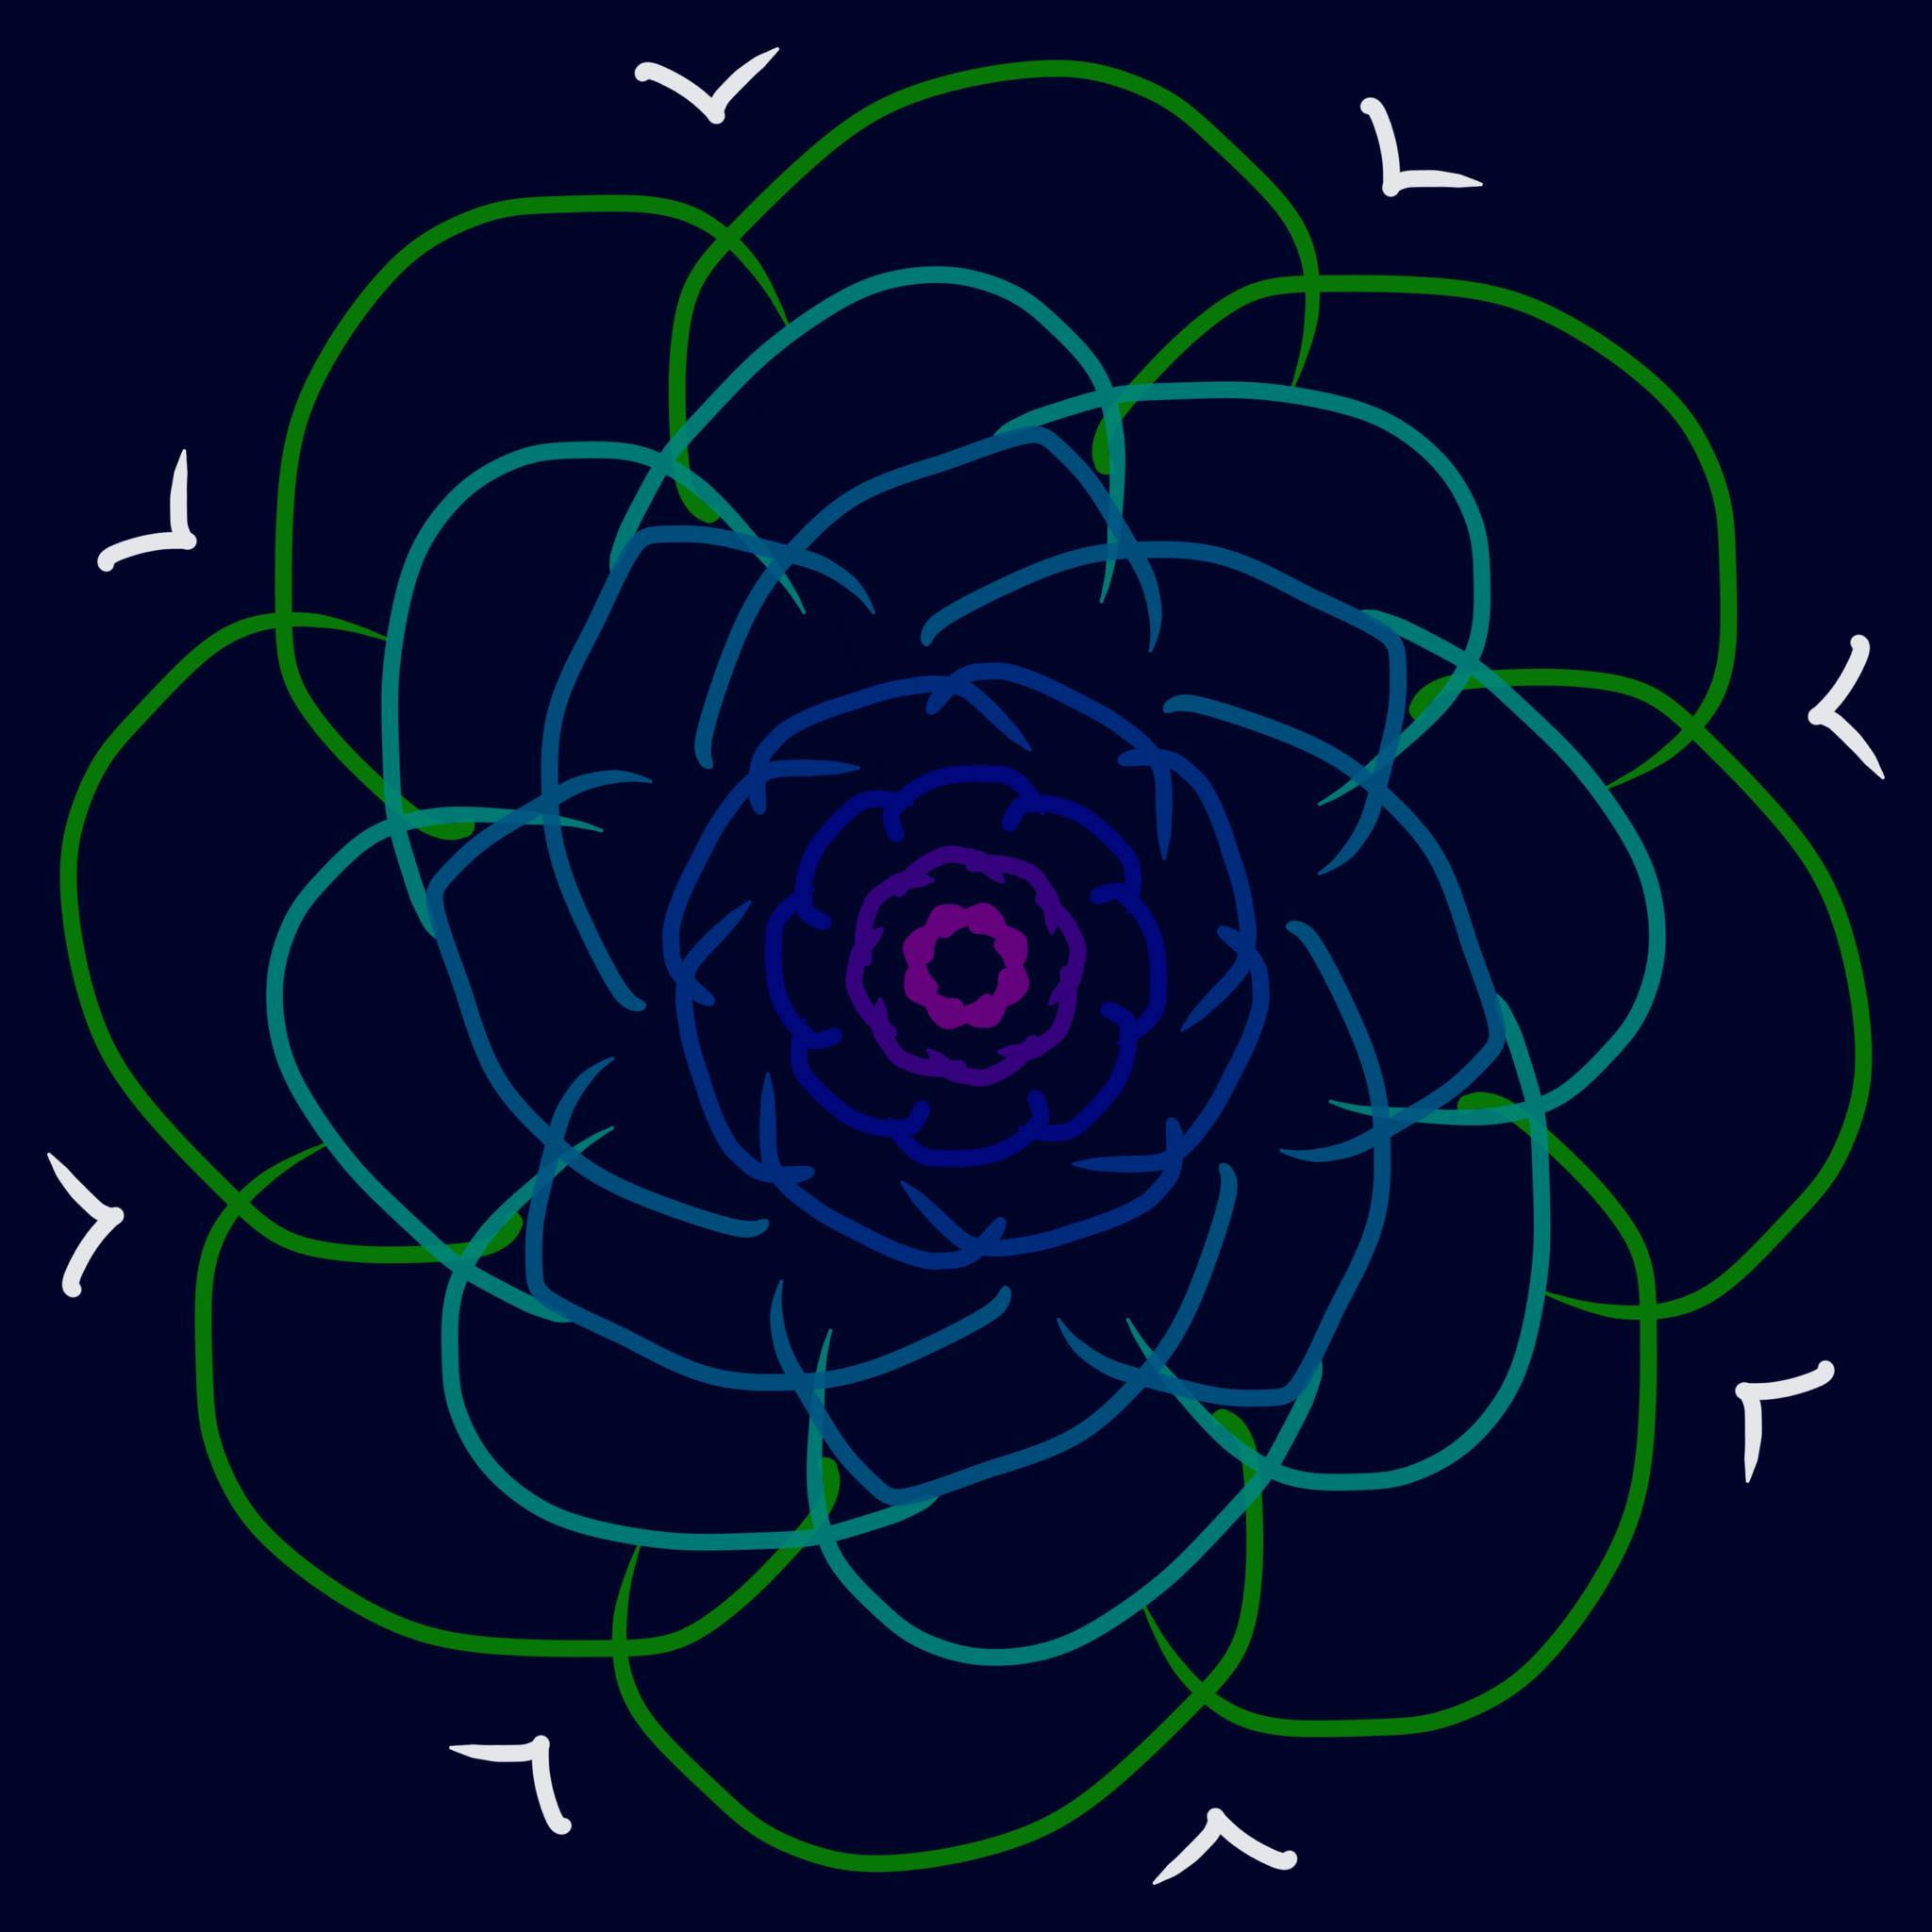 green and blue floral spiral on black background